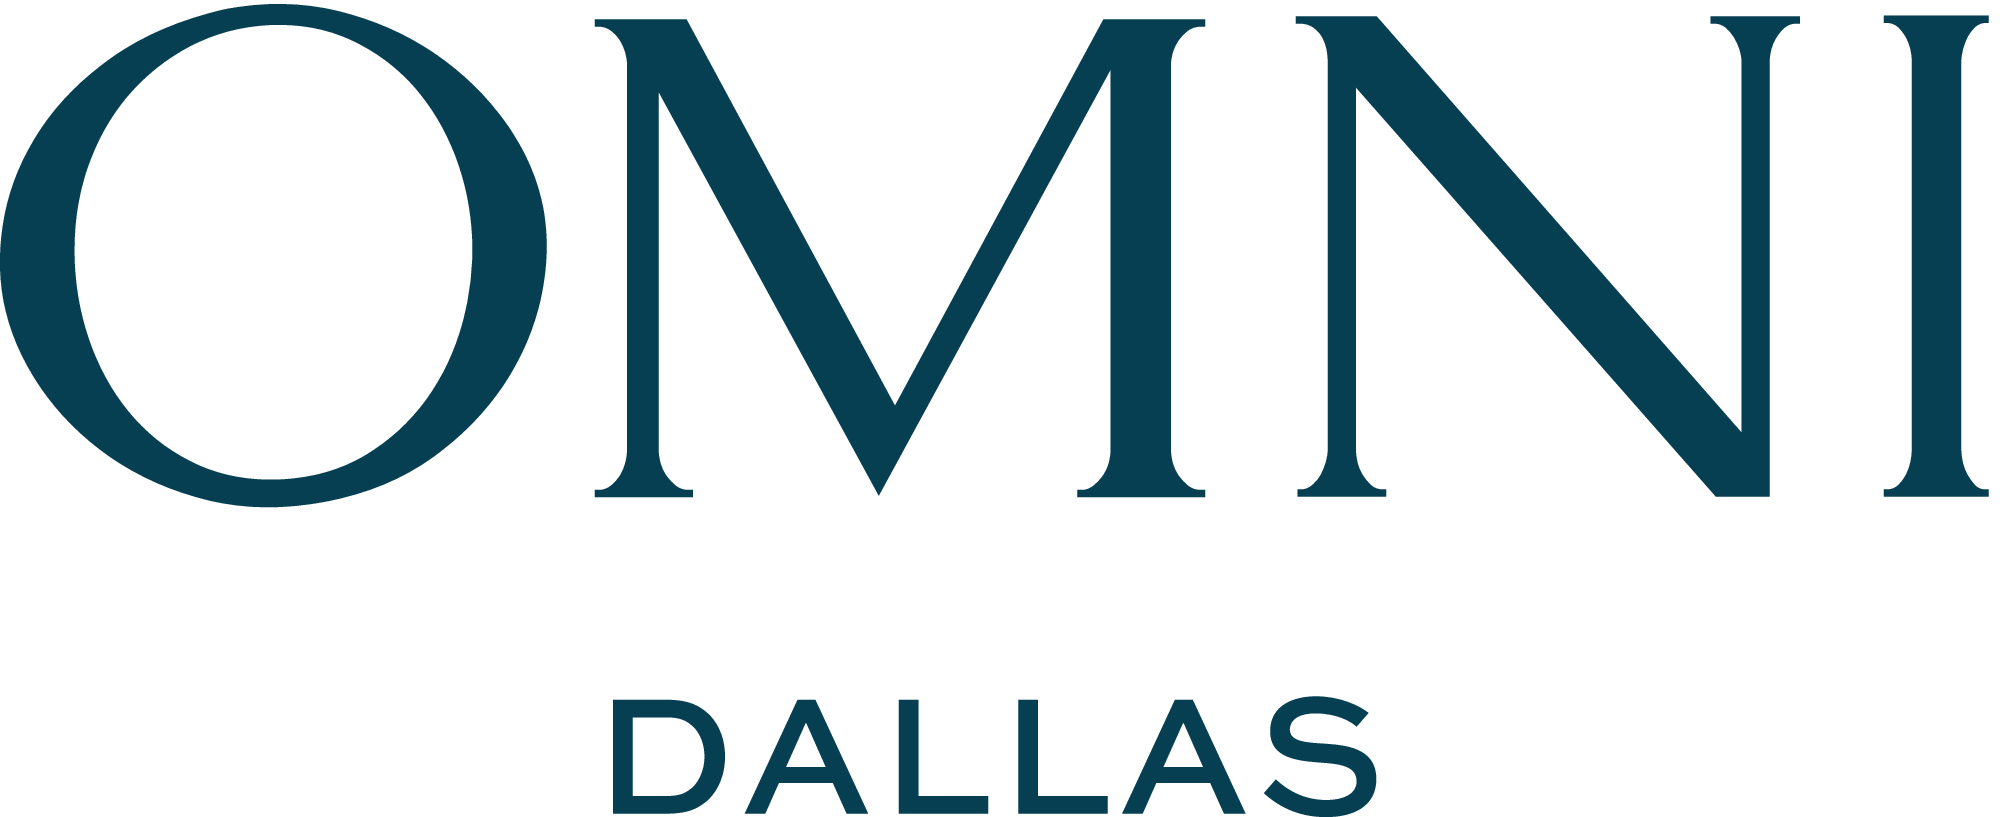 DALDTN Omni Dallas Hotel Vertical MidnightBlue Digital 1